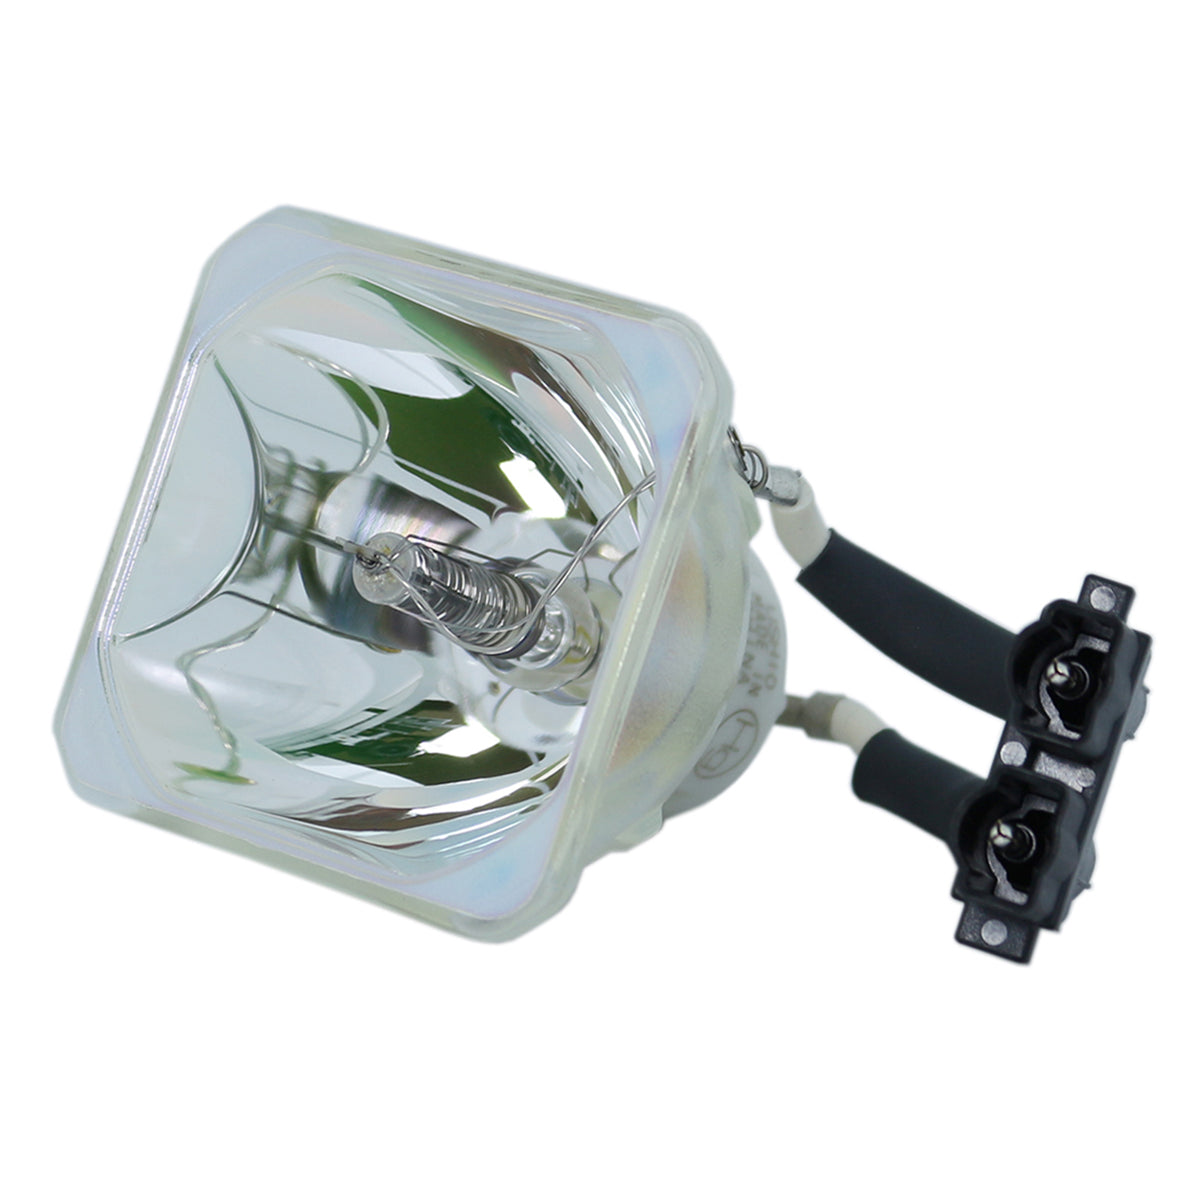 Dukane 456-8077 Ushio Projector Bare Lamp